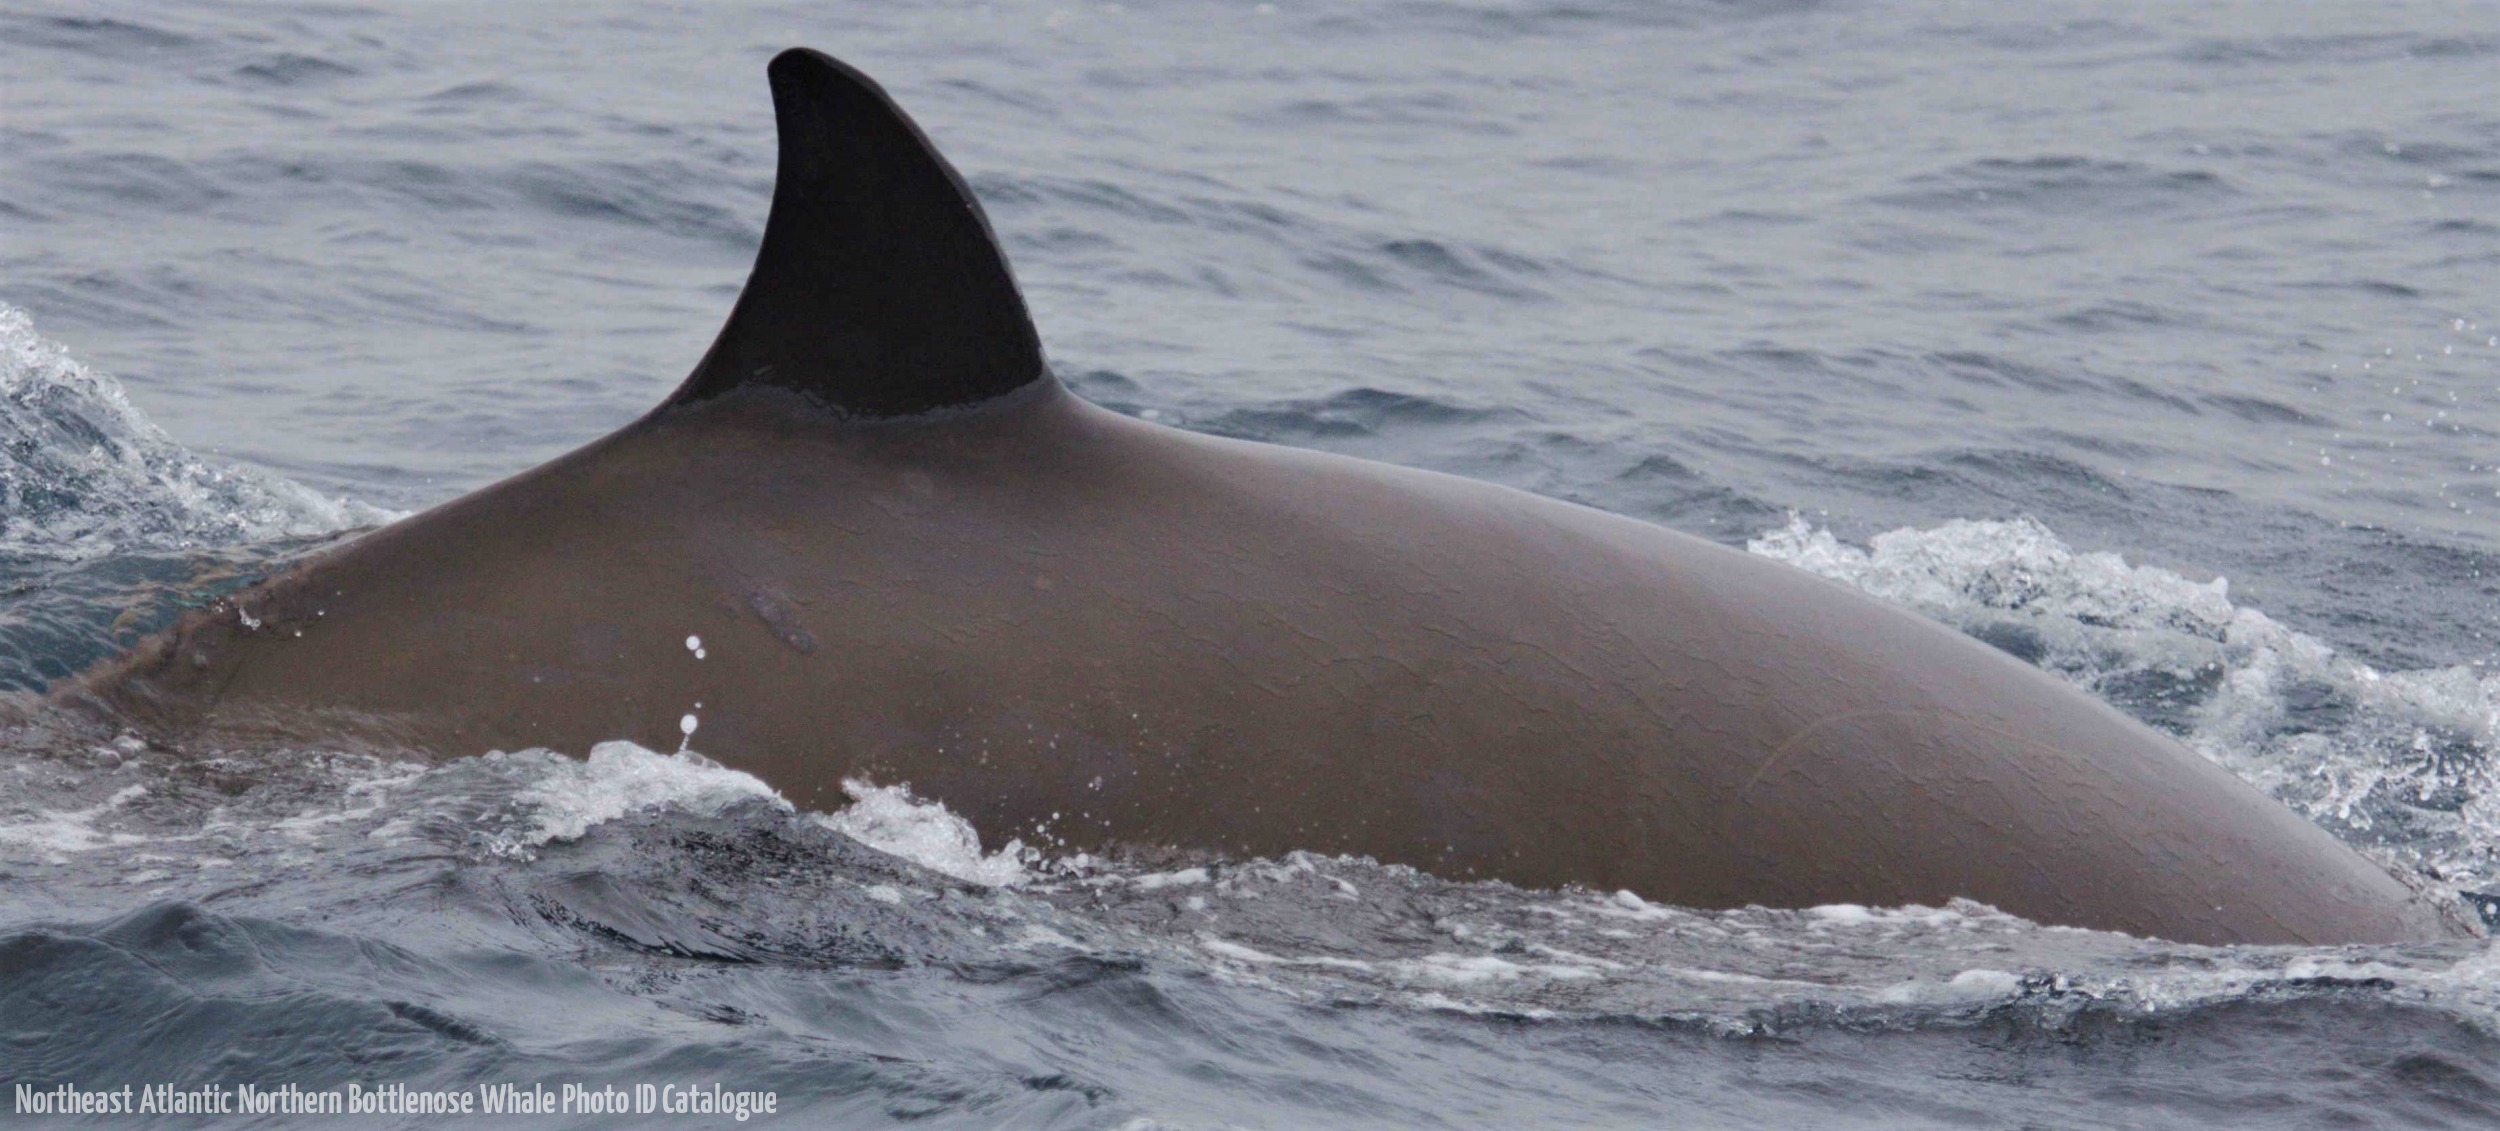 Whale ID: 0312,  Date taken: 24-06-2014,  Photographer: Lucia M. Martín López